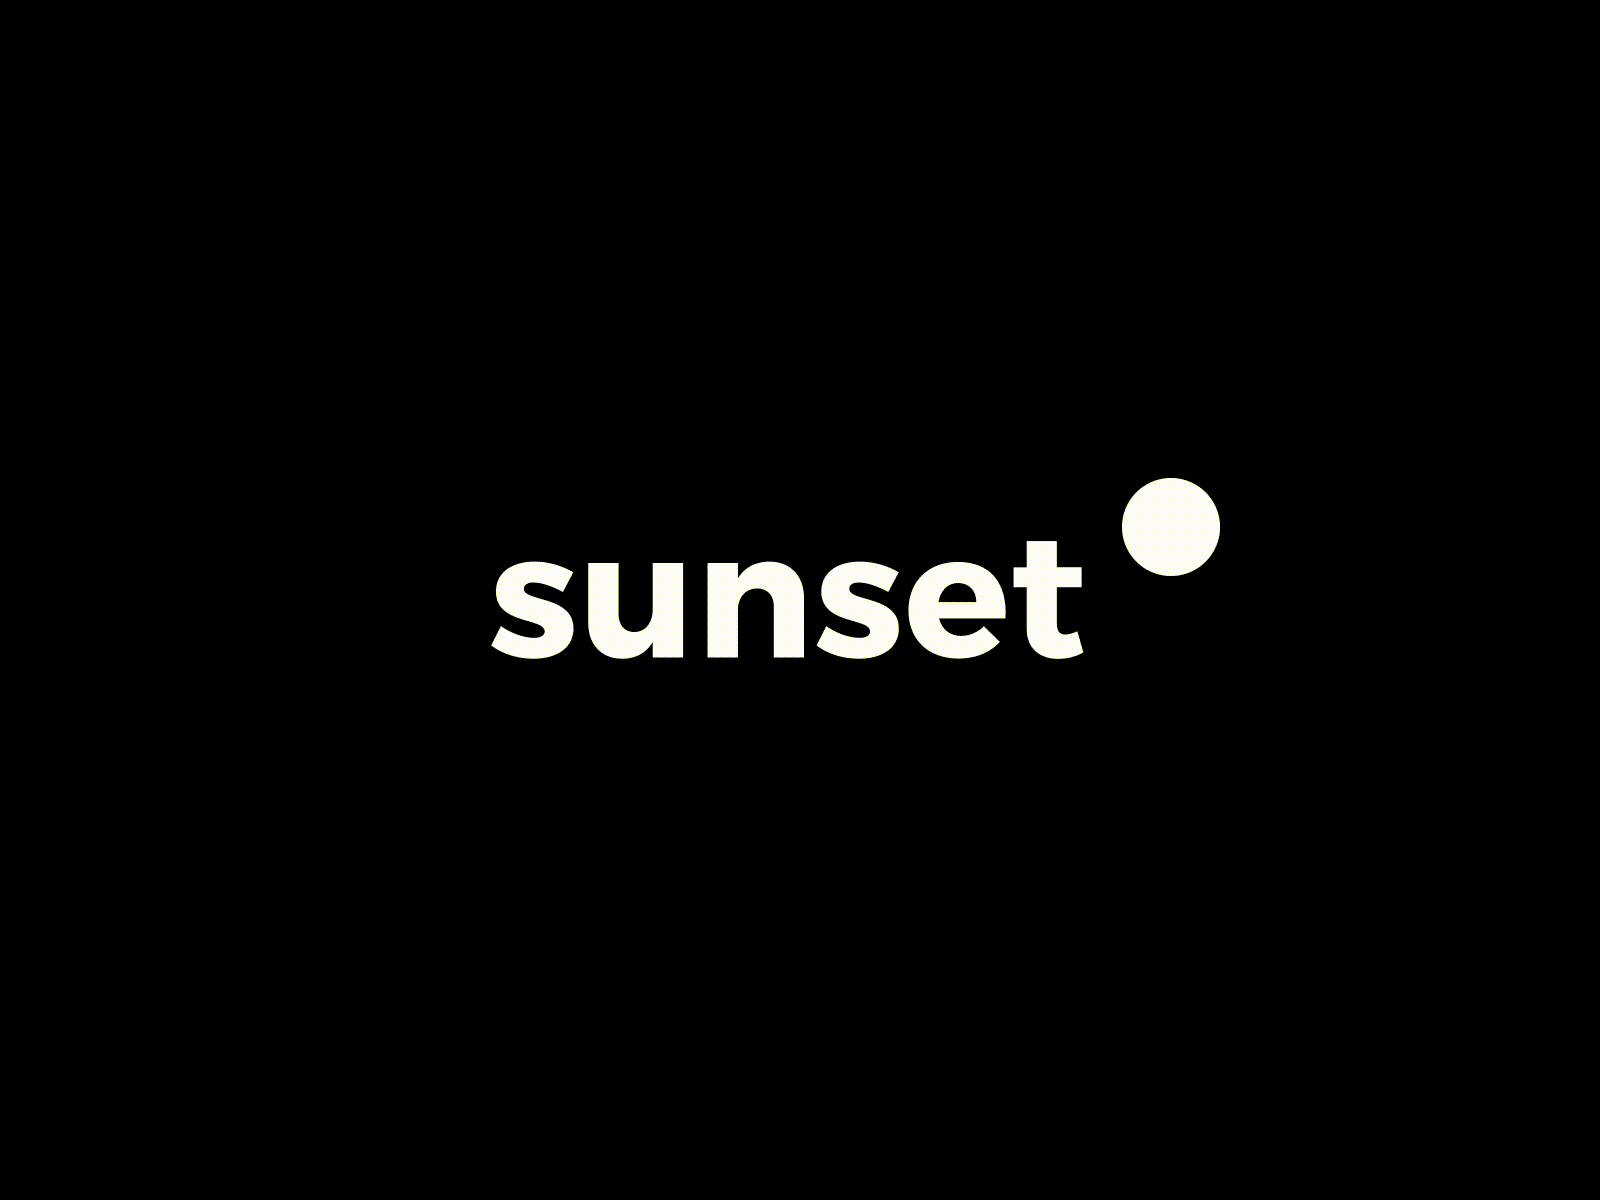 The Sunset after effects animation 2d black and white designer dribbble logo logo reveal mograph sunrise sunset